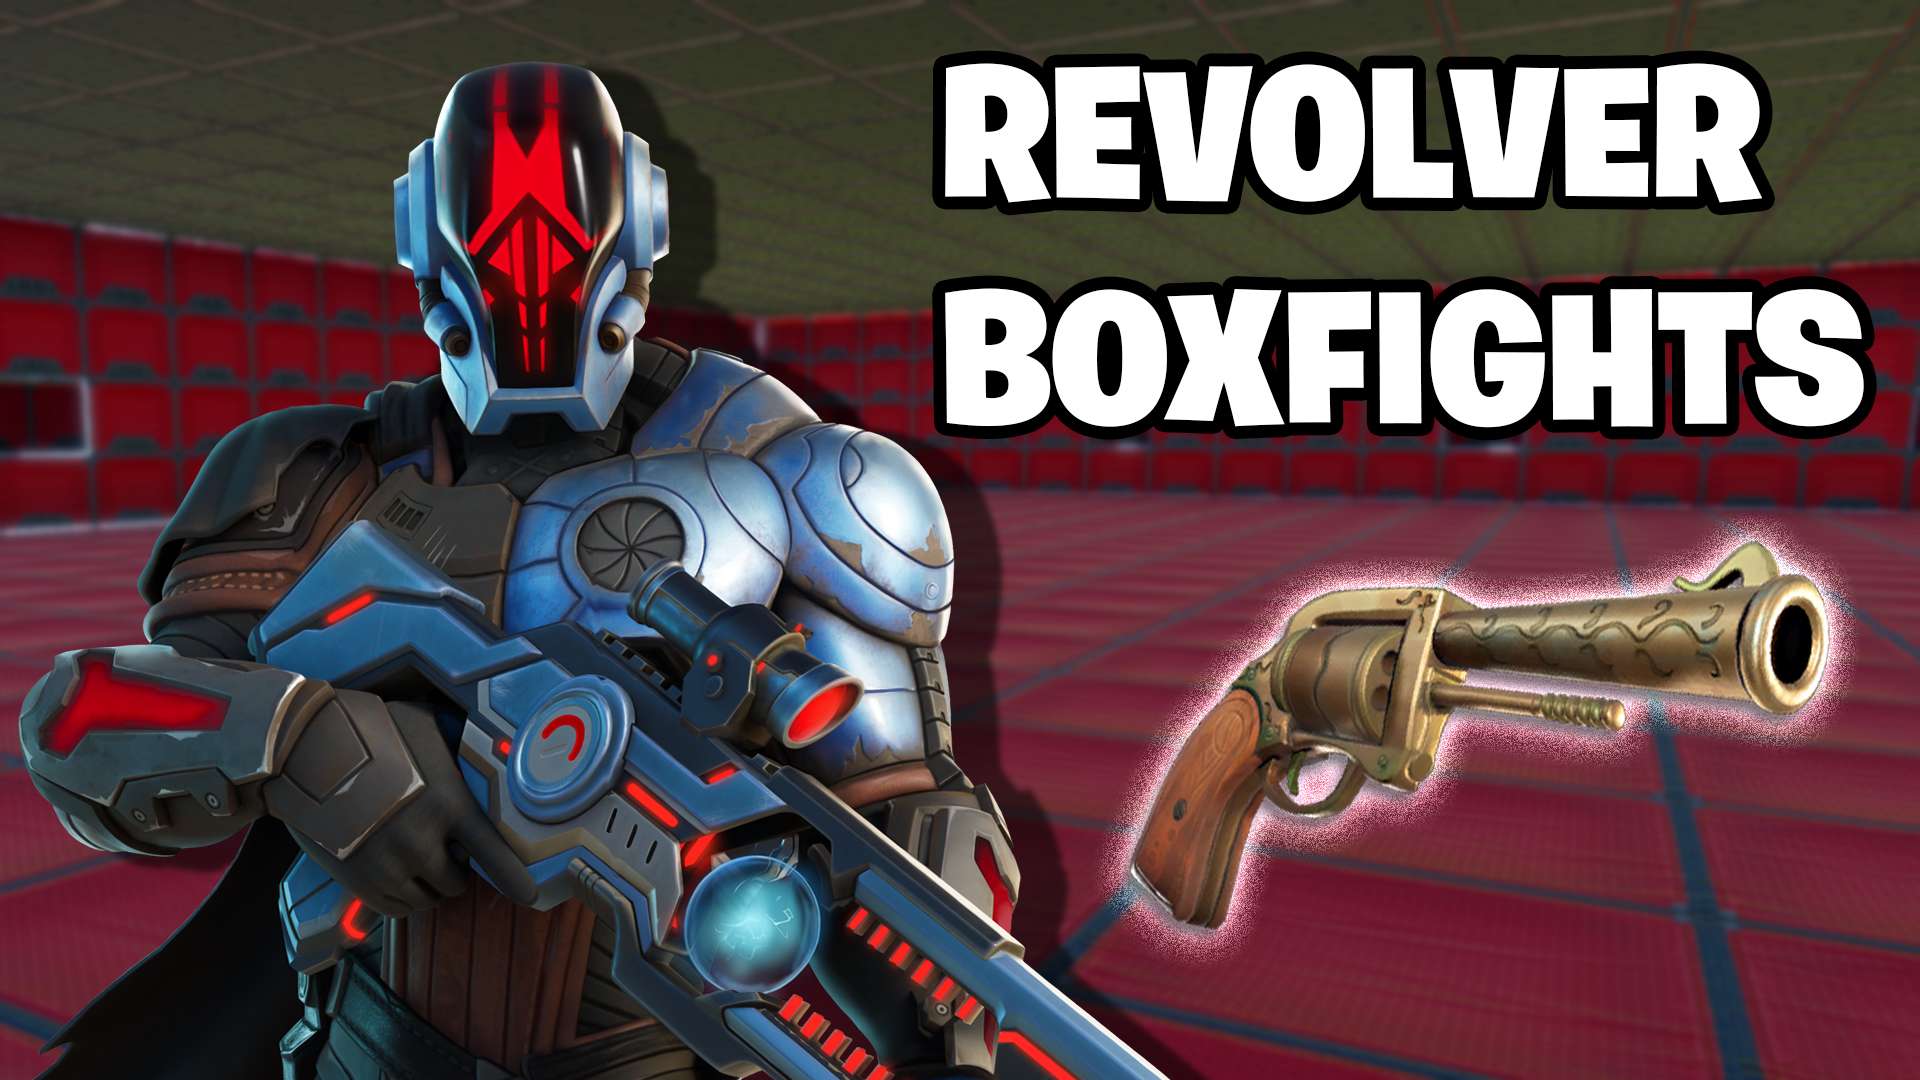 REVOLVER BOXFIGHTS